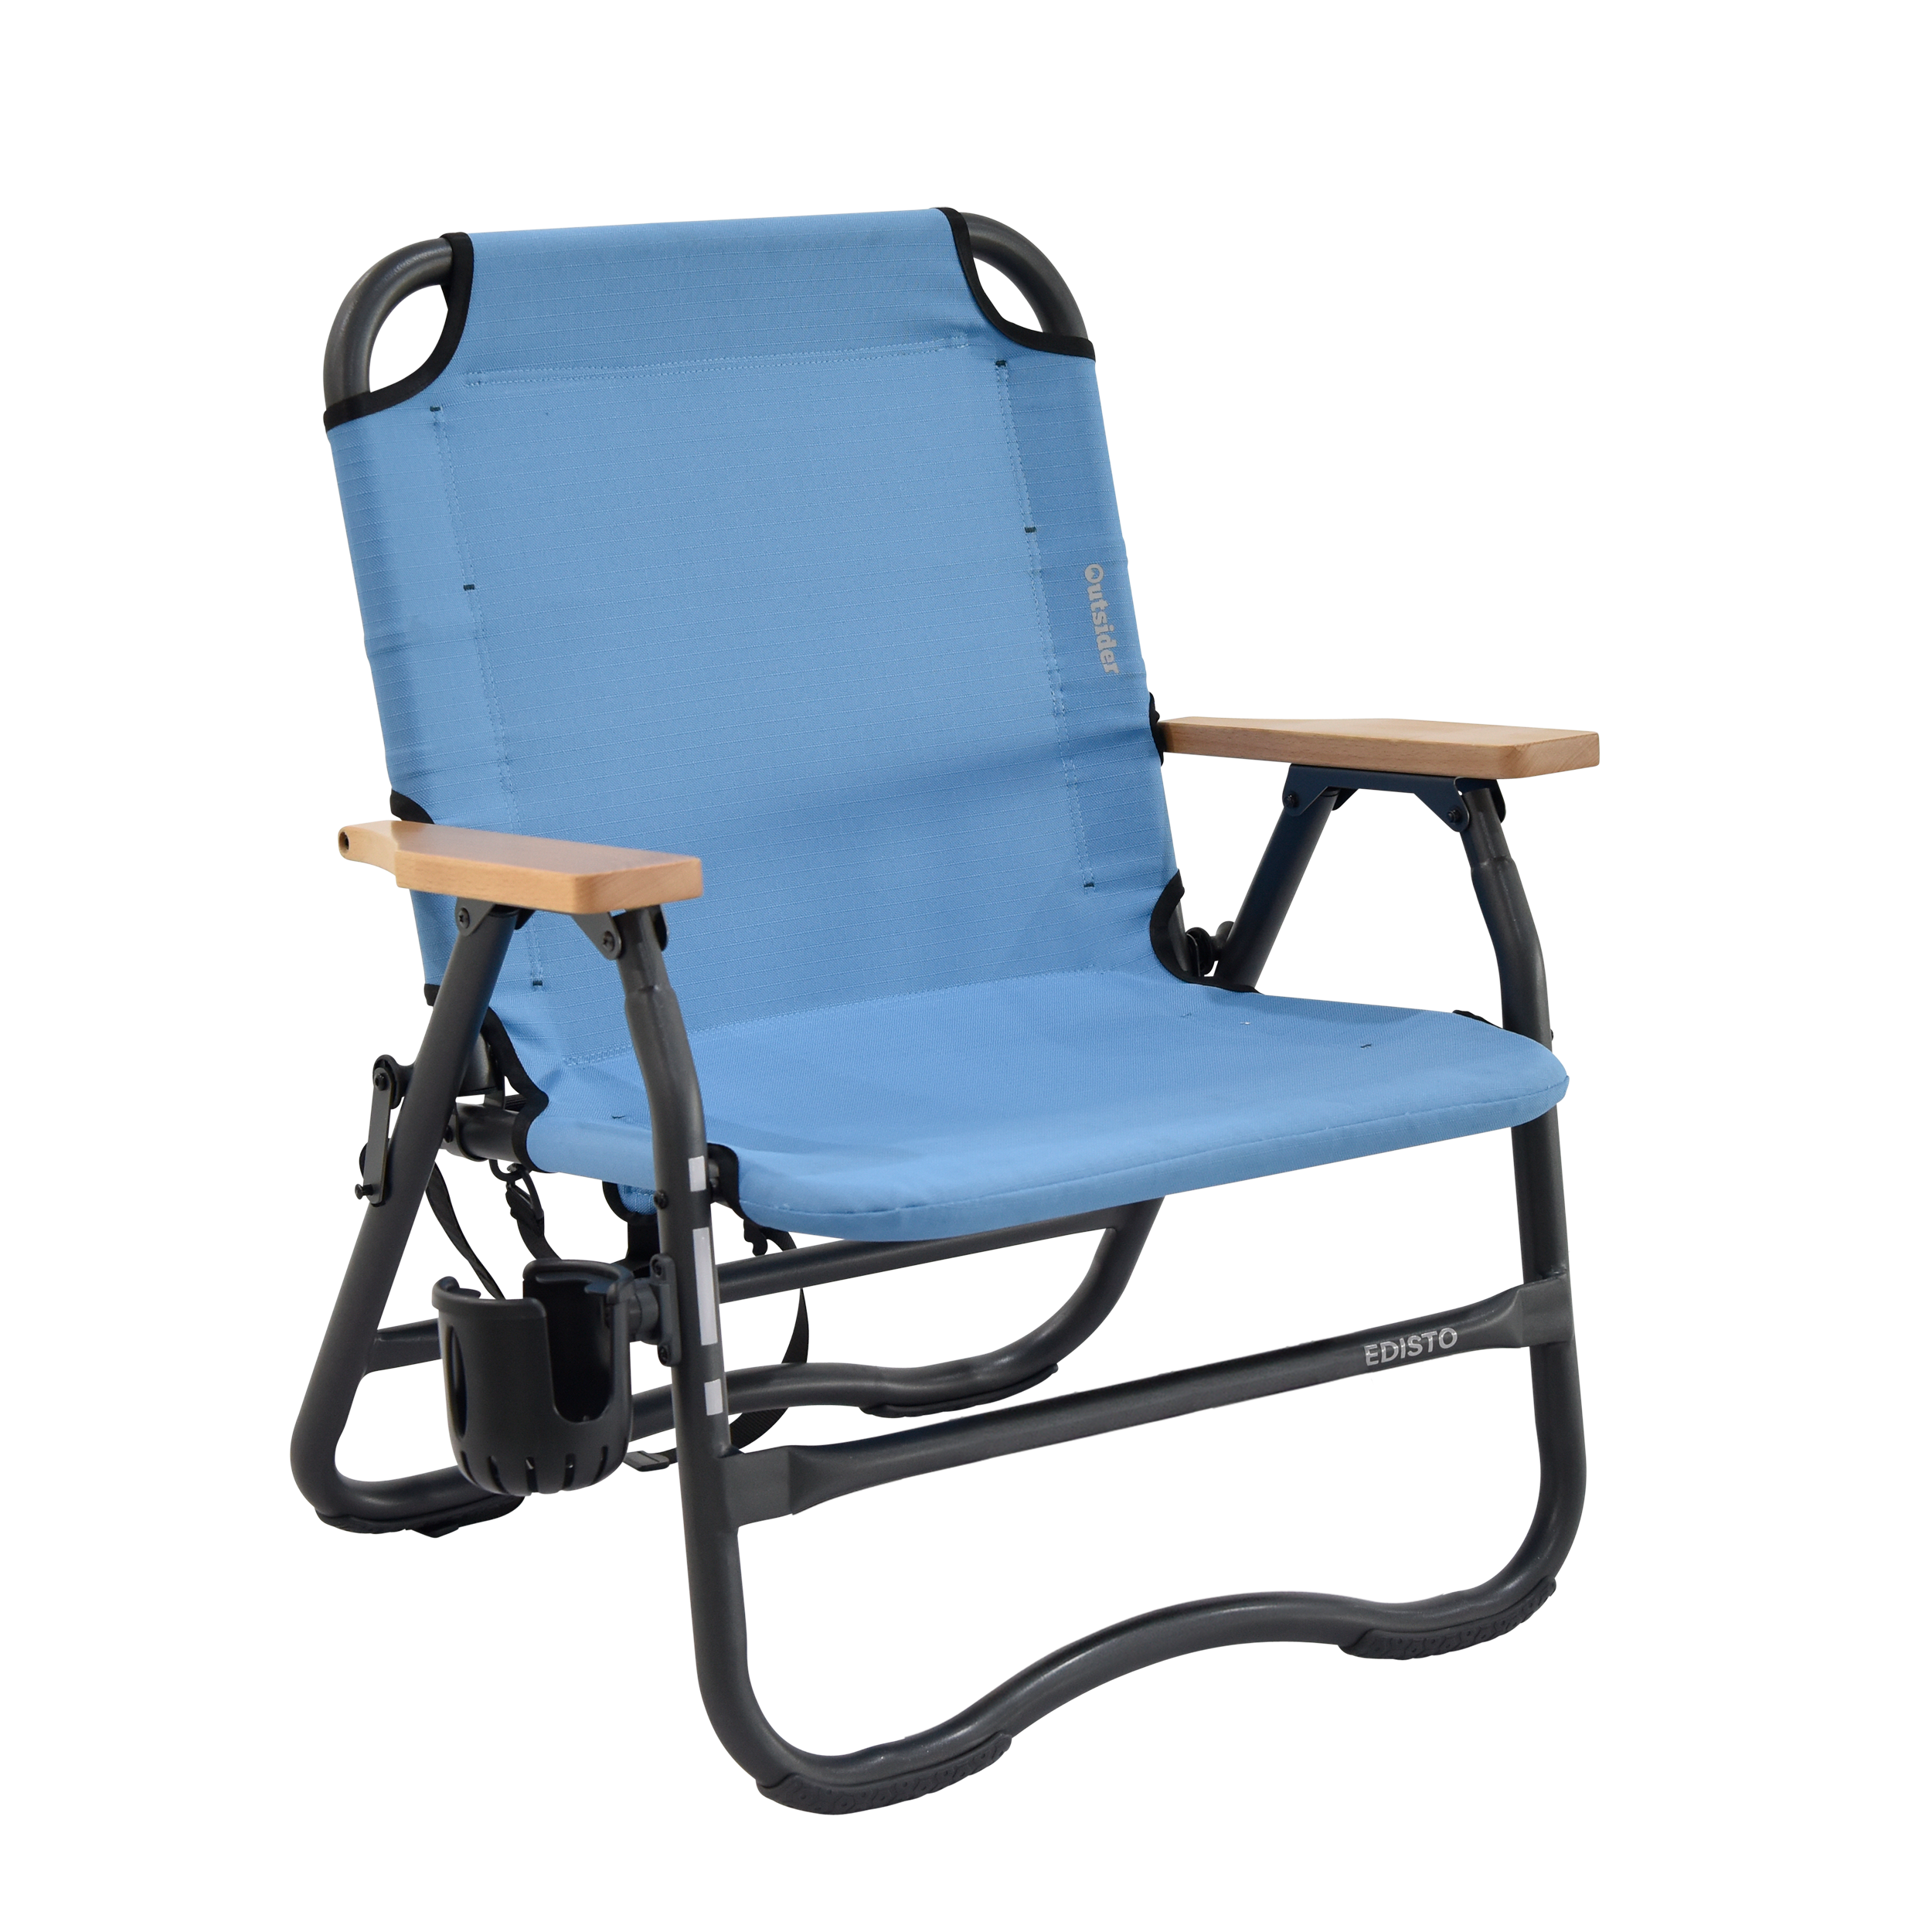 Outsider Edisto Low Beach & Camp Chair